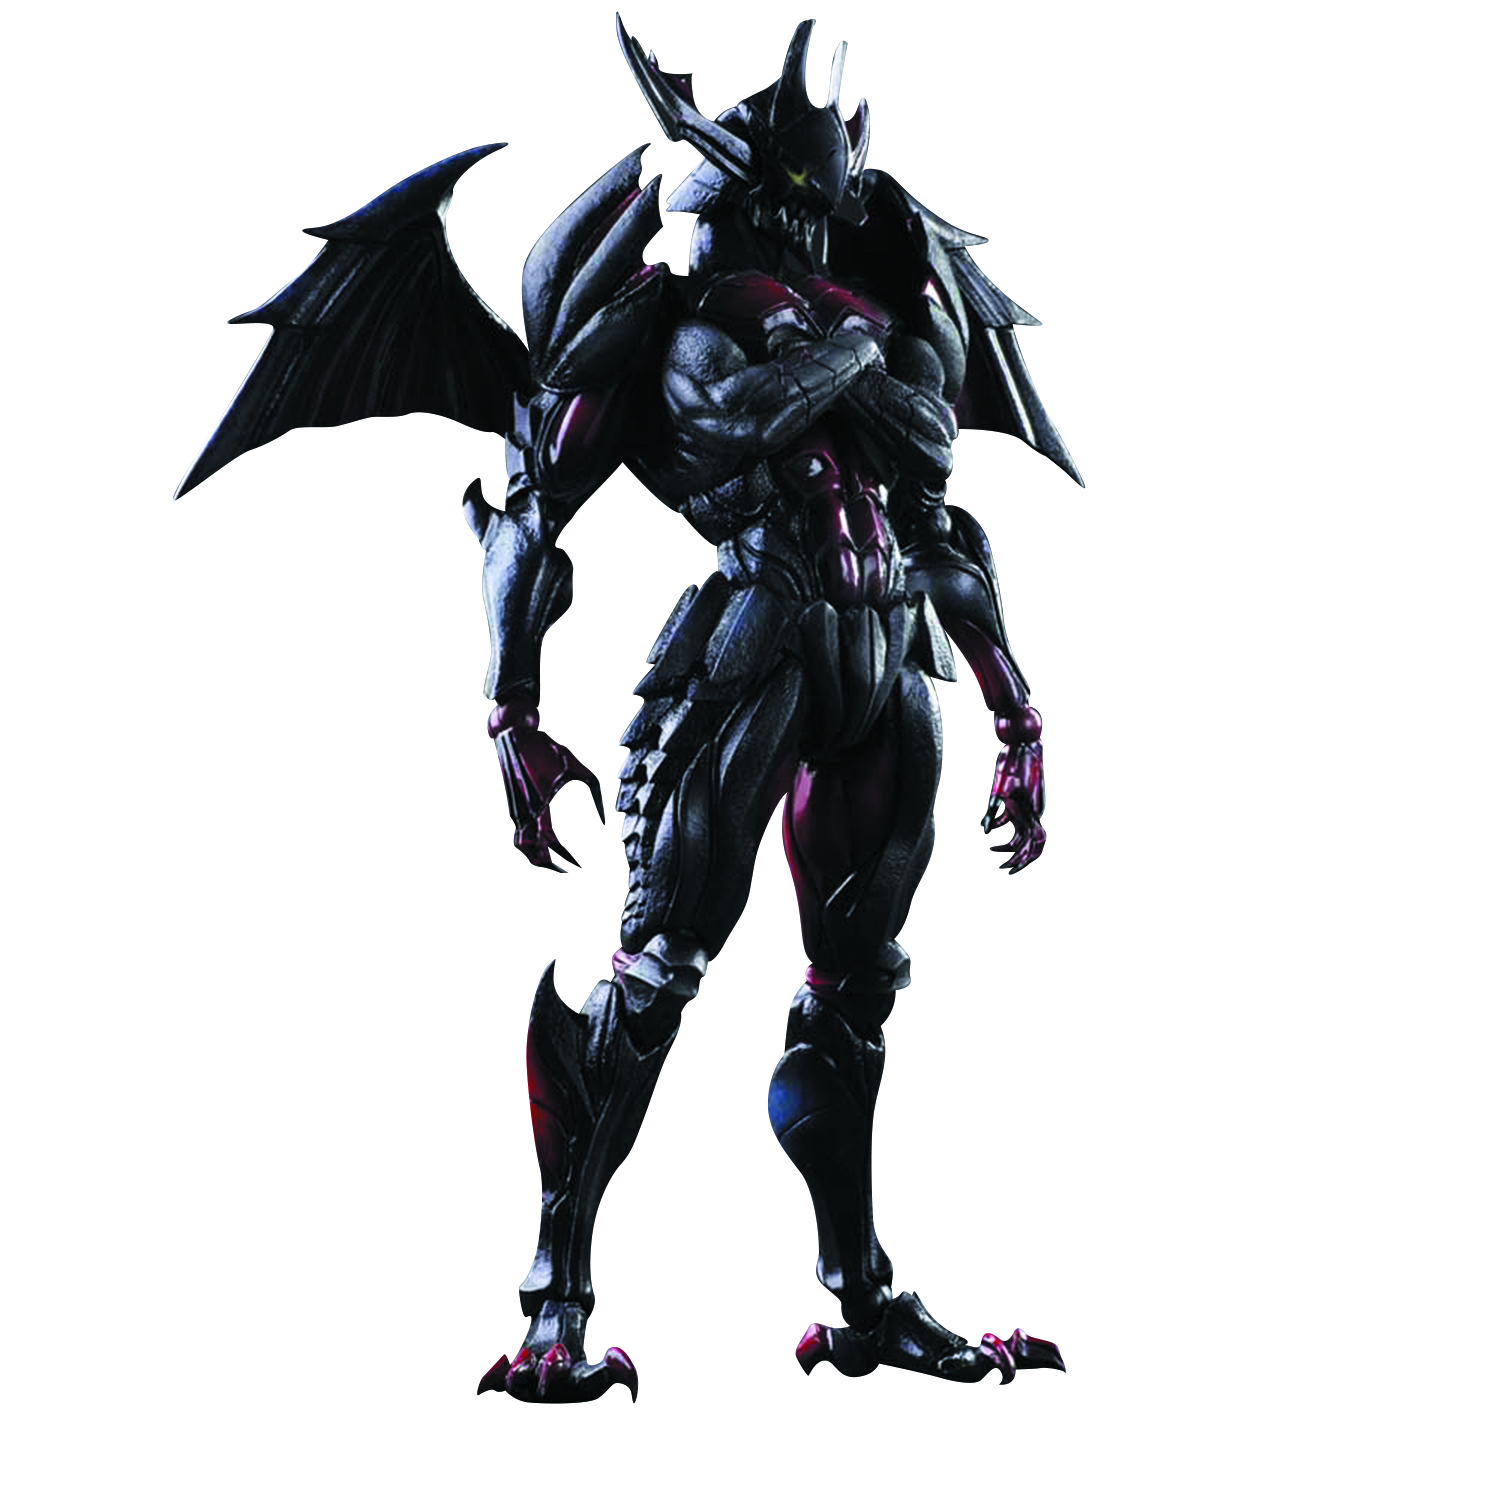 Monster Hunter 4 Ultimate Brings Back Diablos, Cephadrome, And